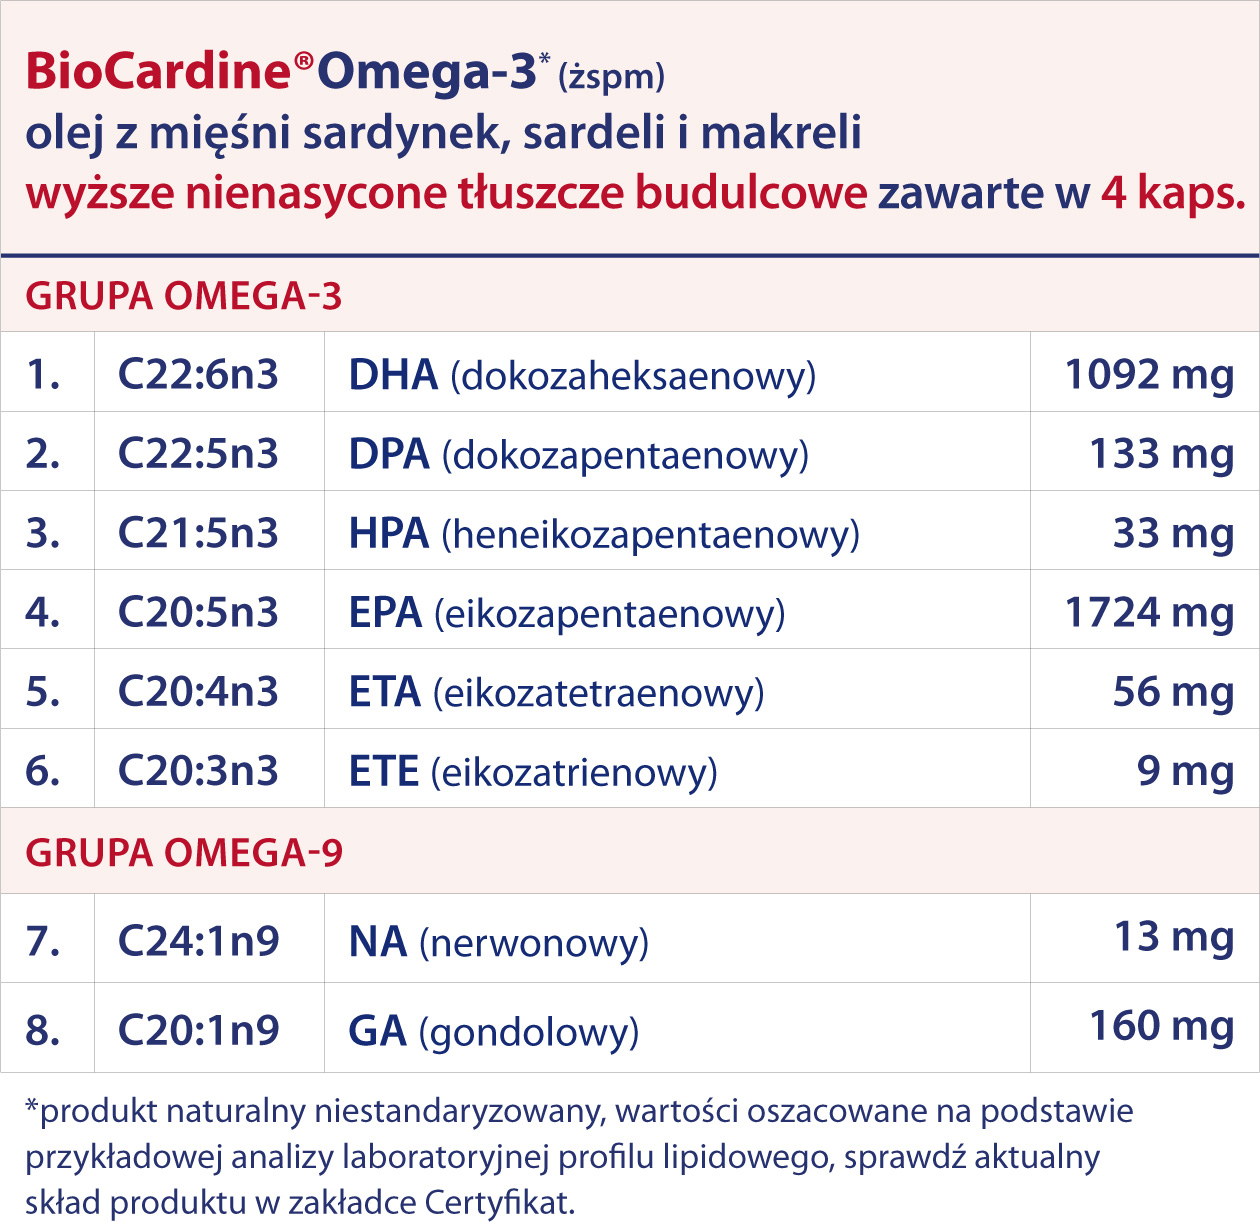 BiiCardine Omega-3